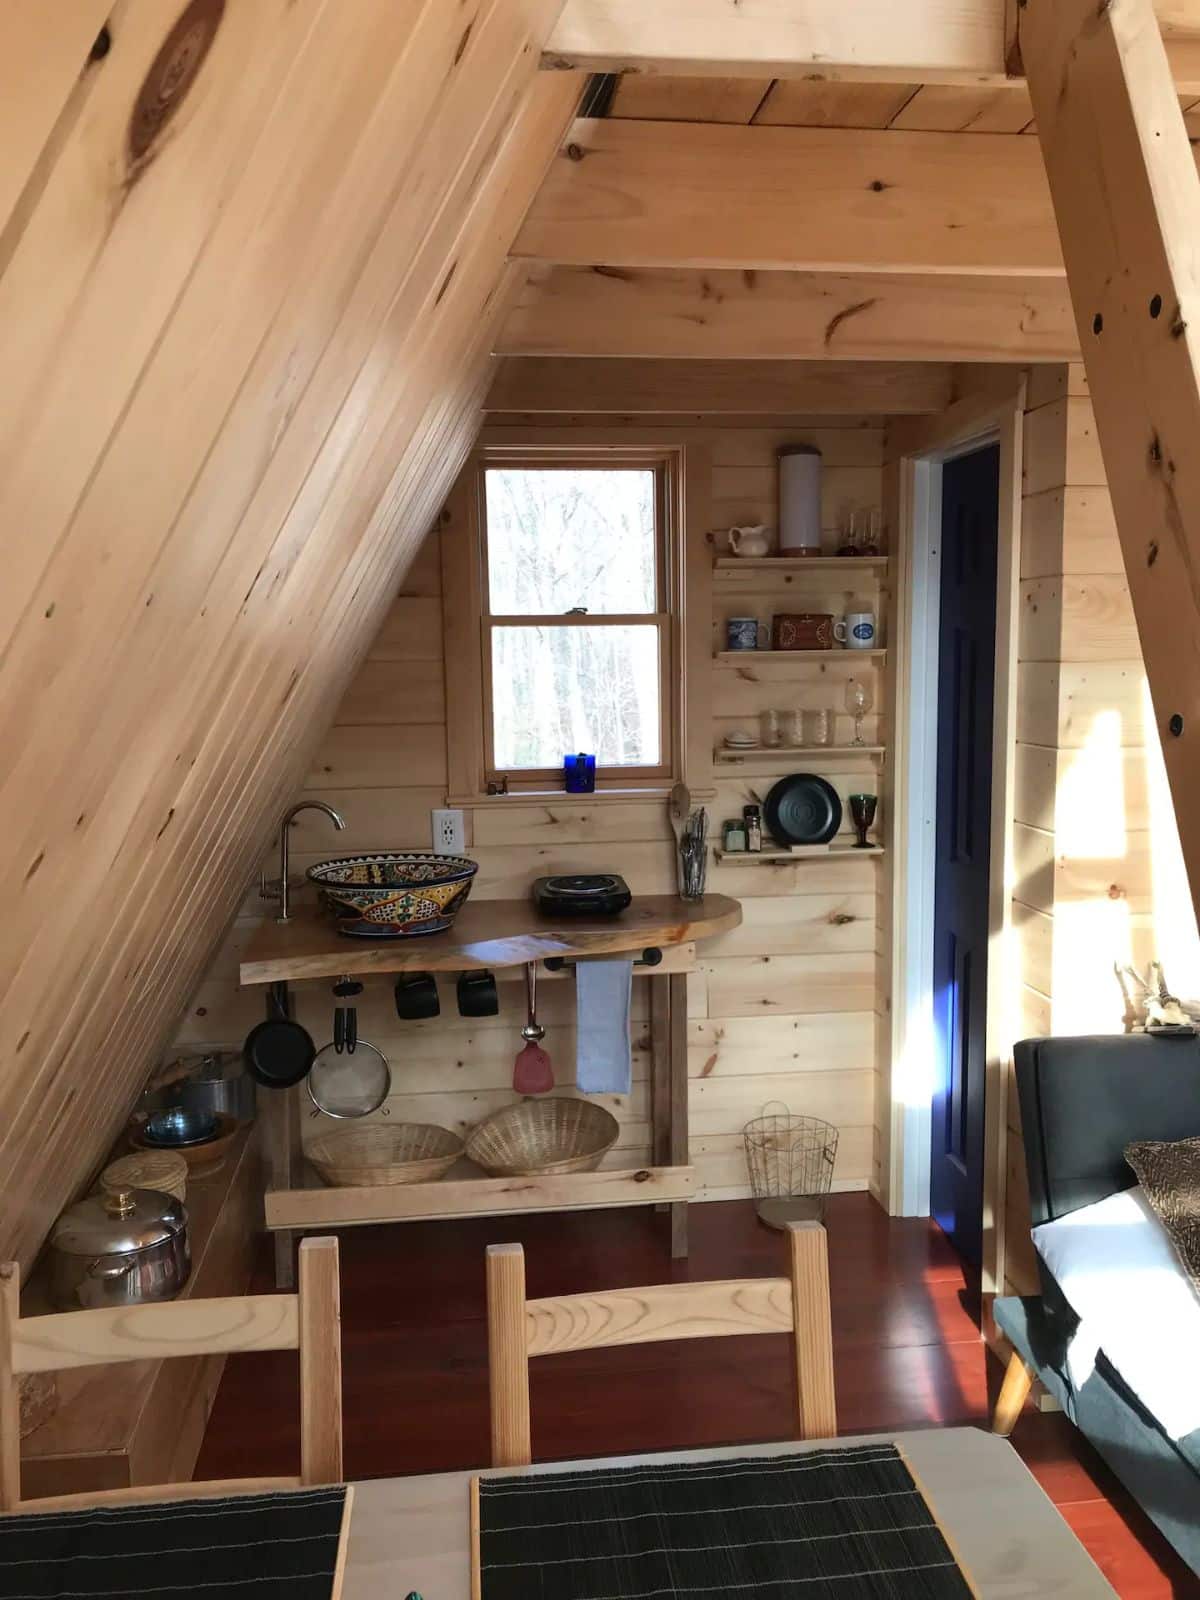 kitchen at back of cabin